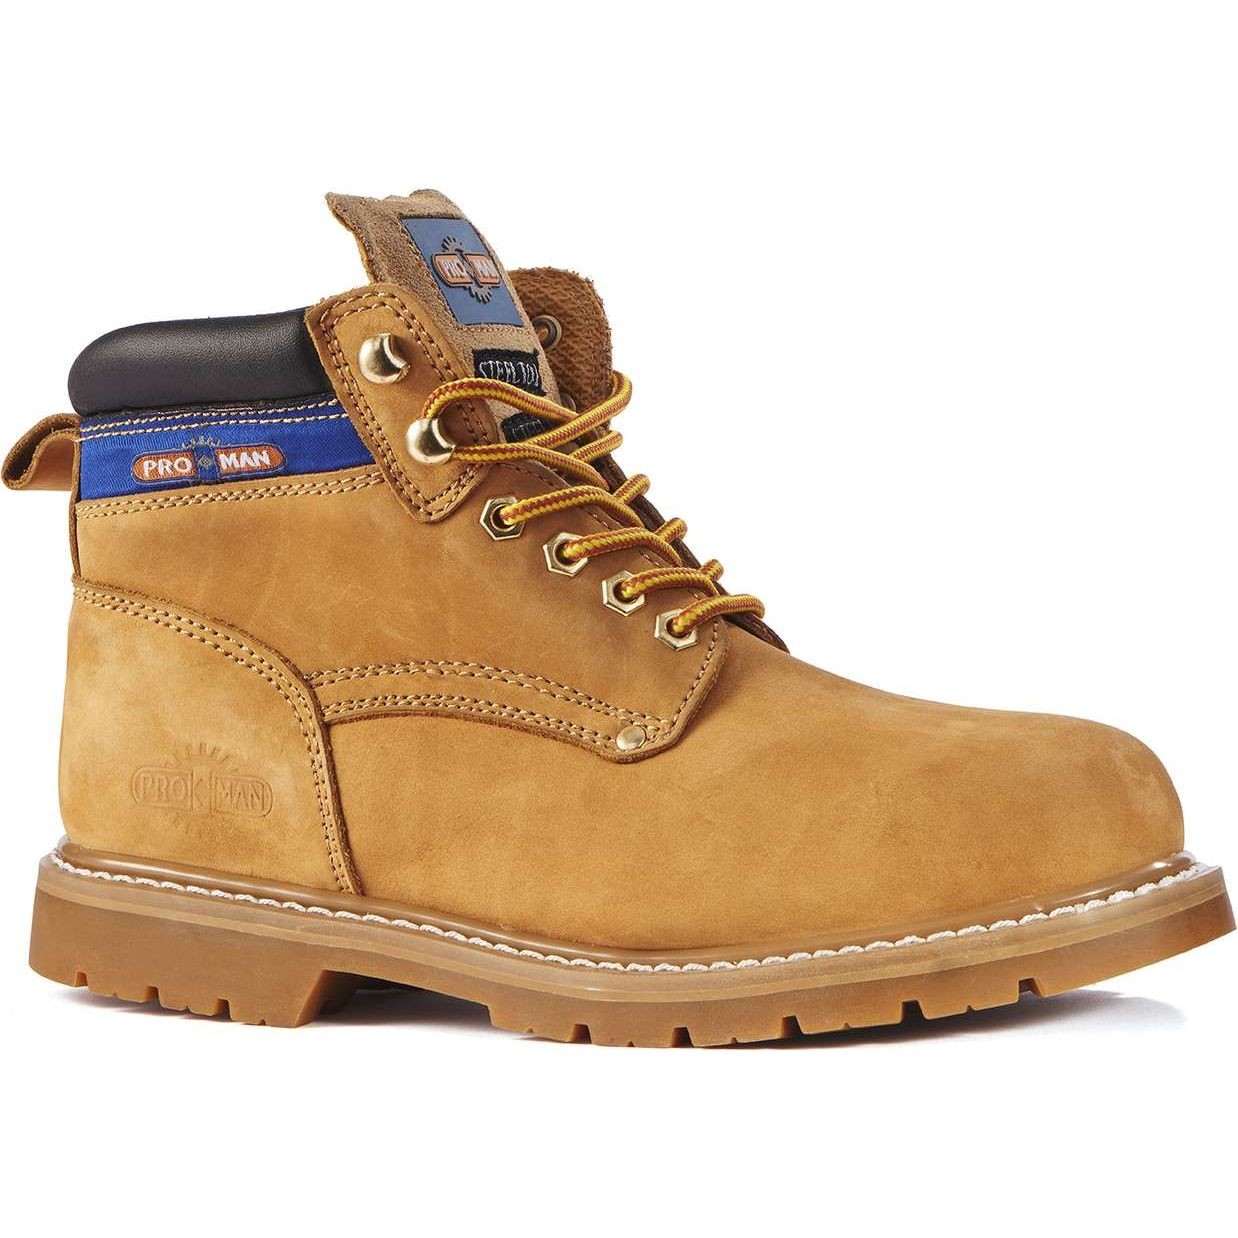 Pro Man Springfield Honey Nubuck Safety Boots (PM9401C)